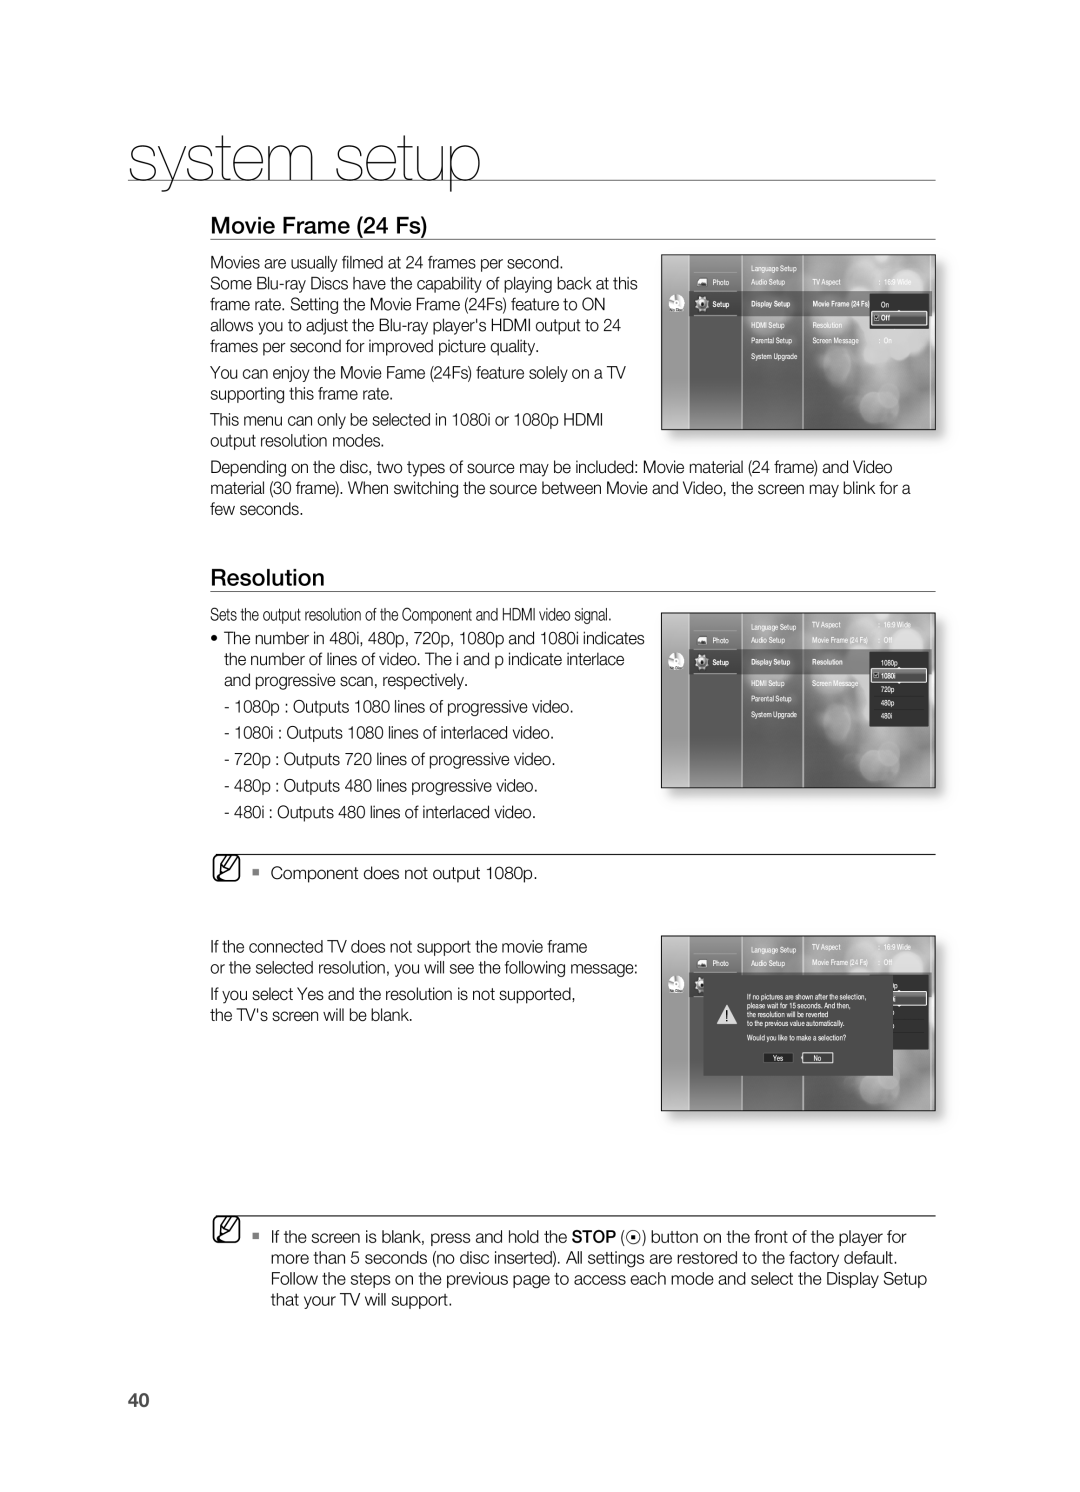 Samsung HT-BD2 manual Movie Frame 24 Fs, Resolution, system setup, frames per second for improved picture quality 